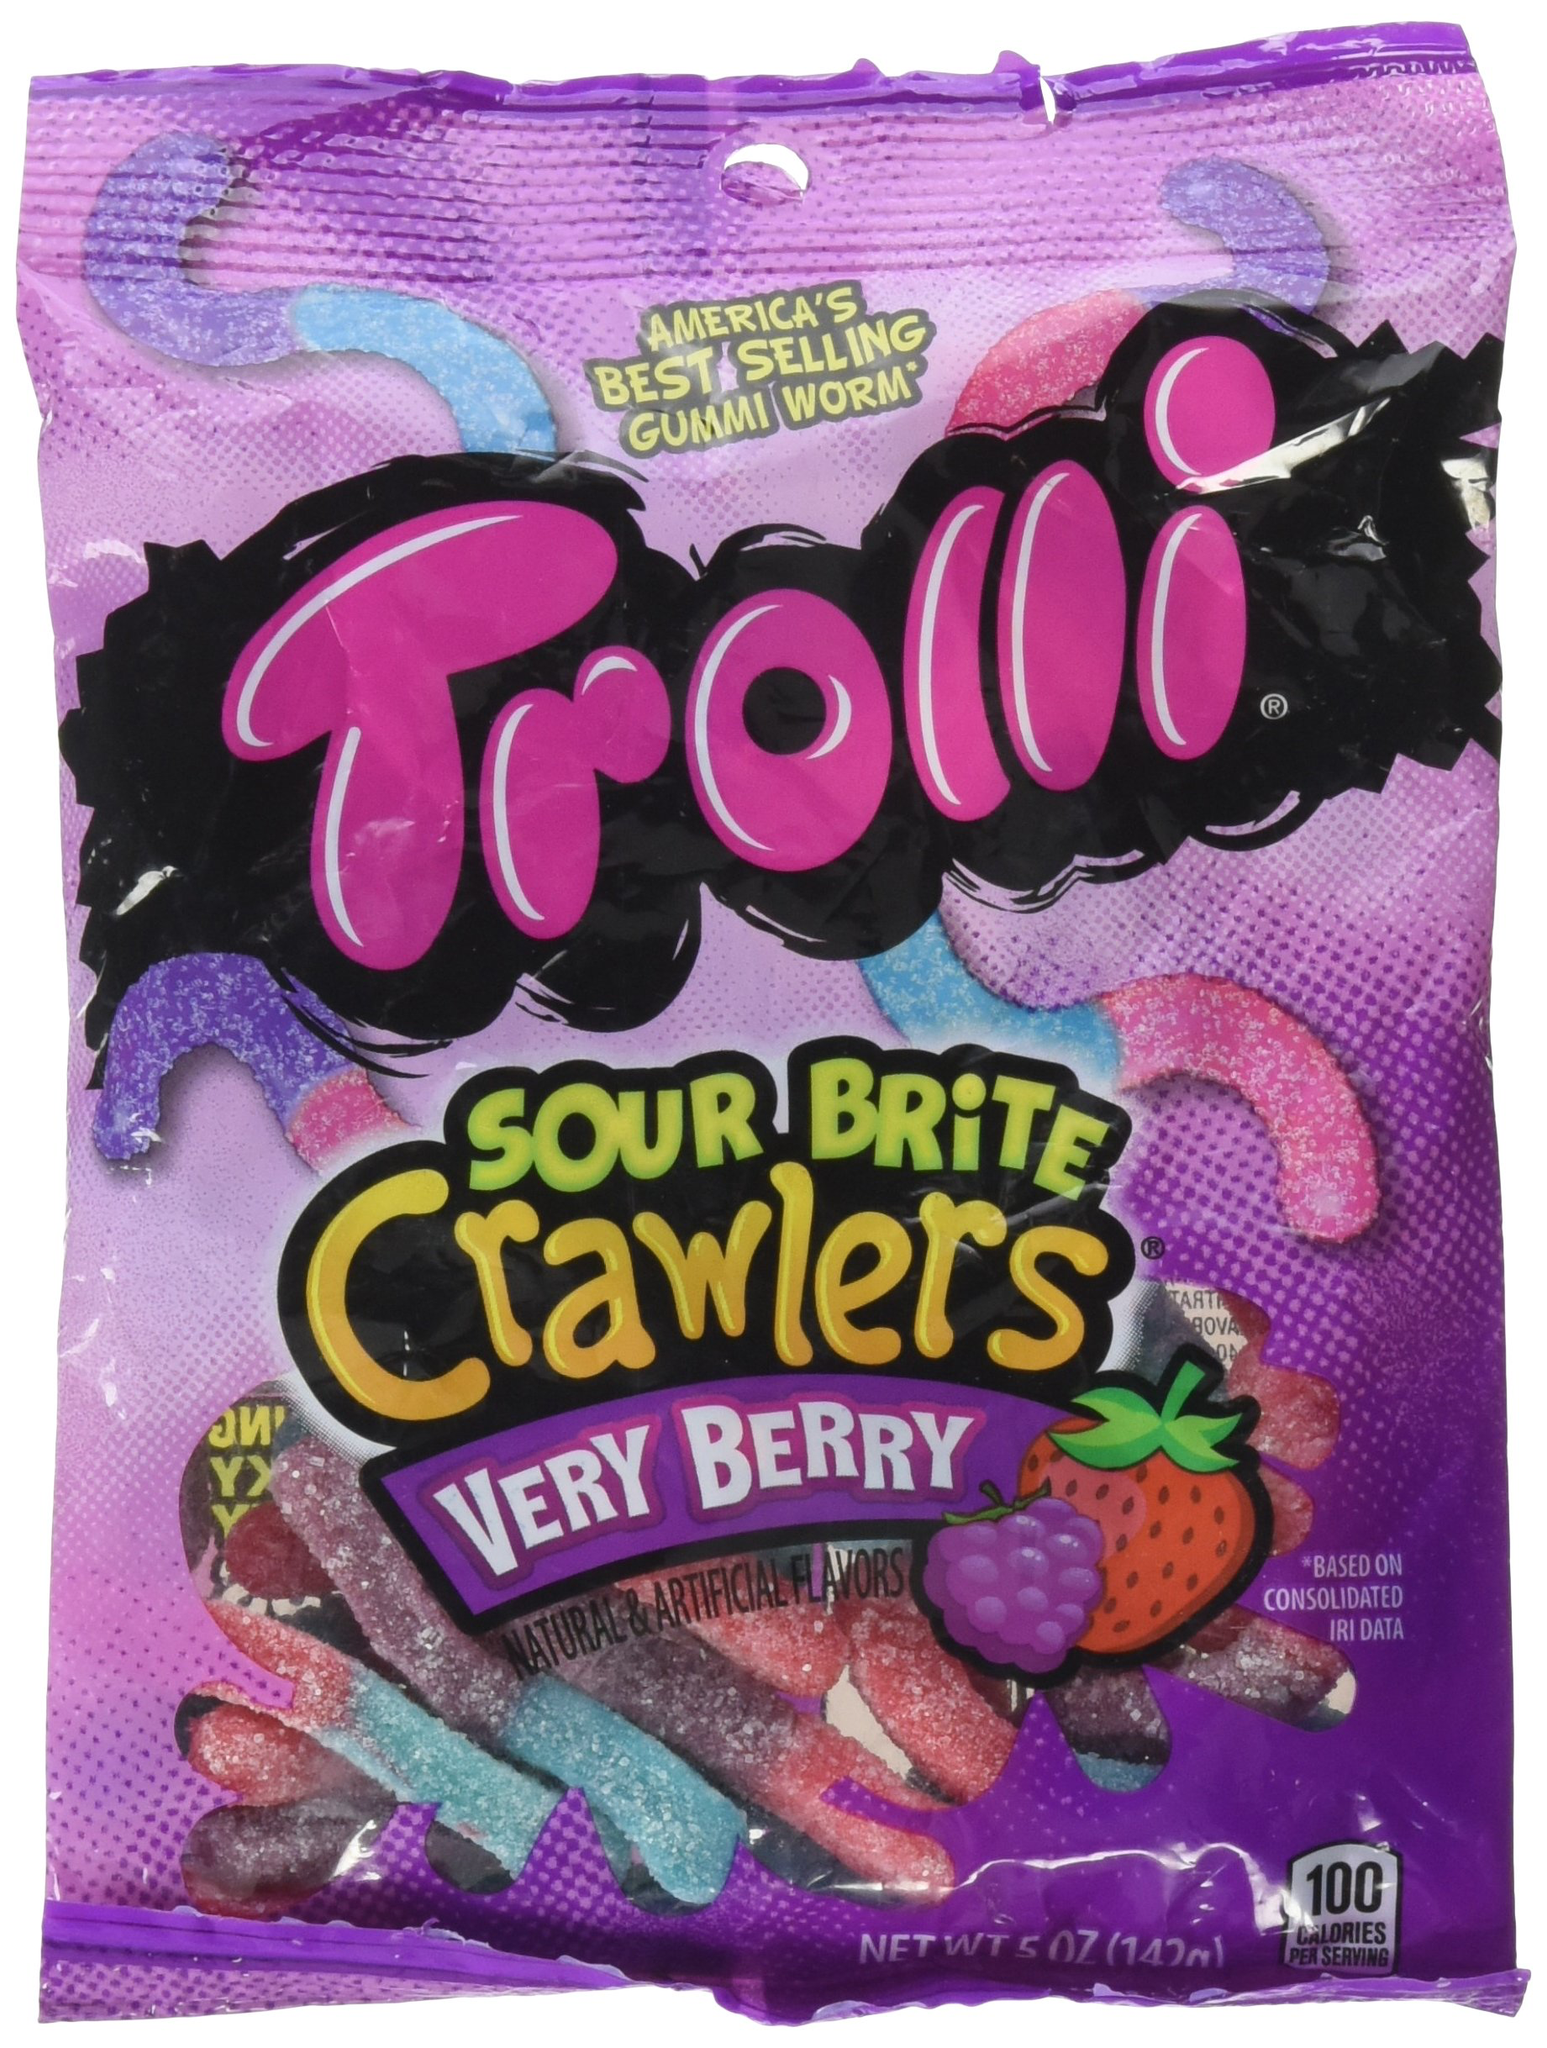 Trolli Very Berry Sour Brite Crawlers, 4oz